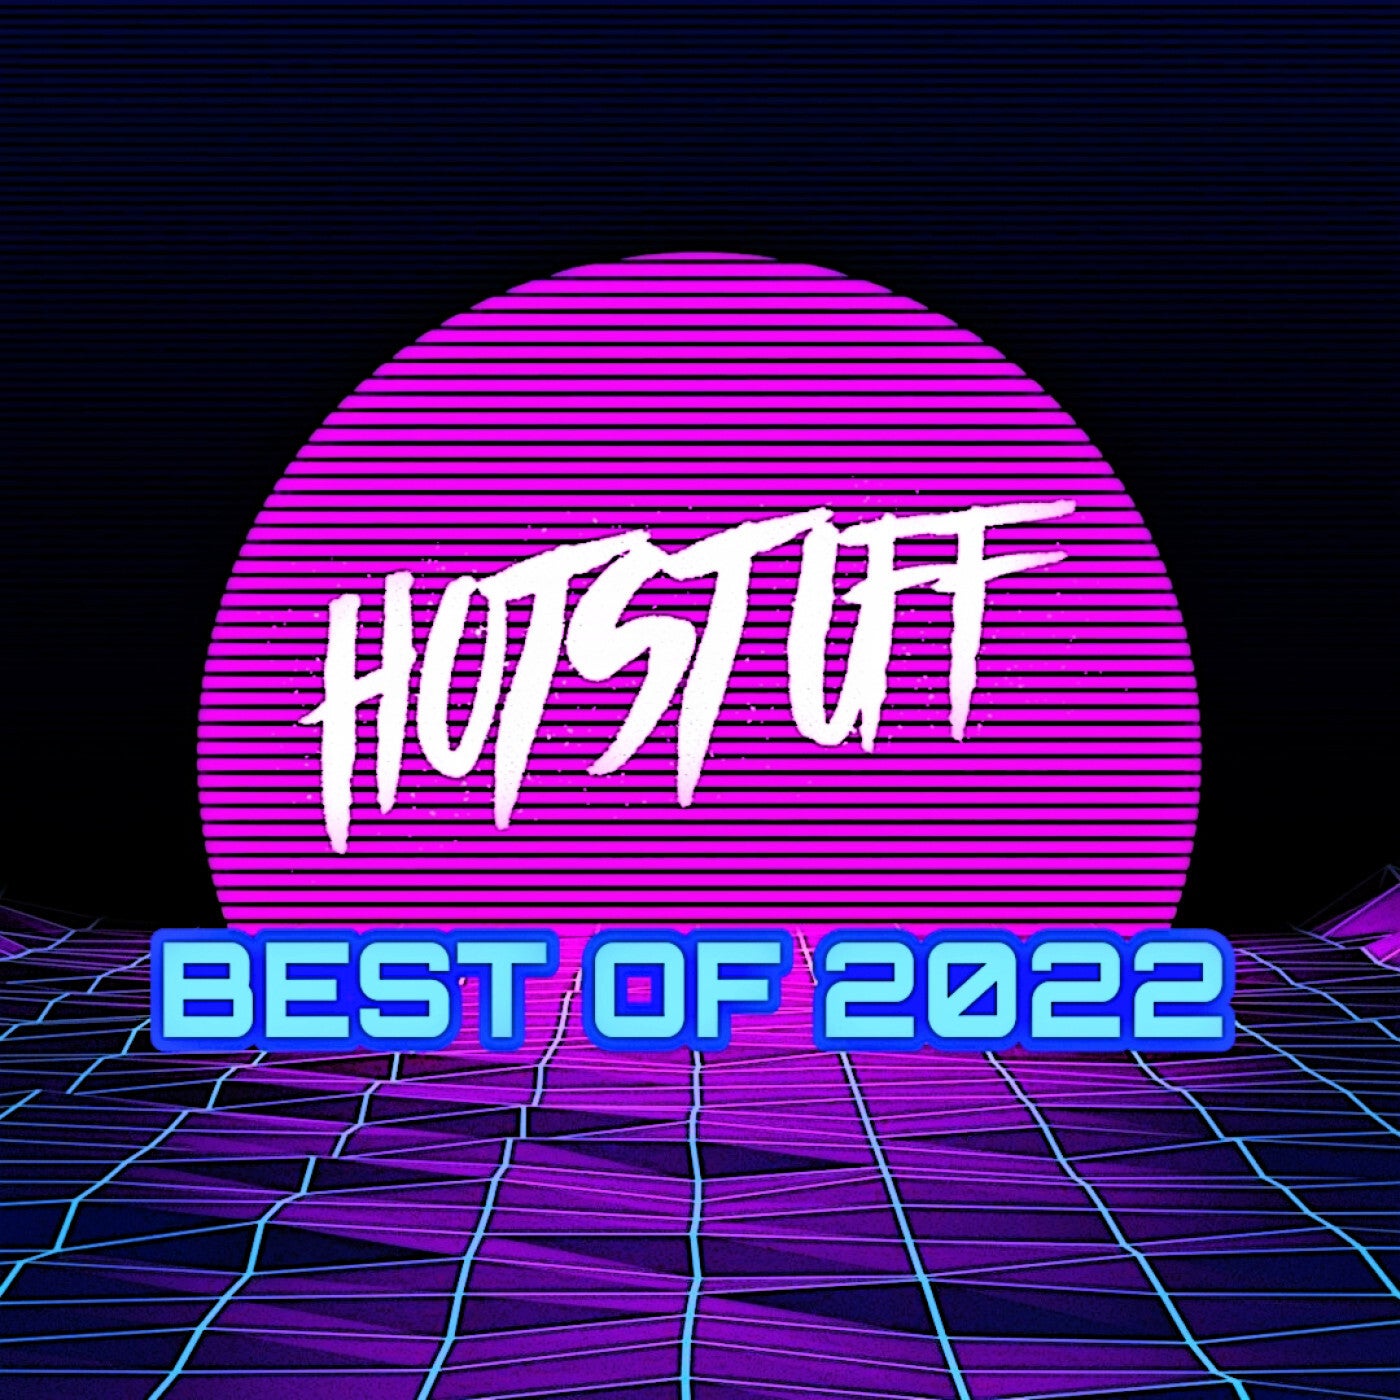 Best Of 2022 - Hot Stuff